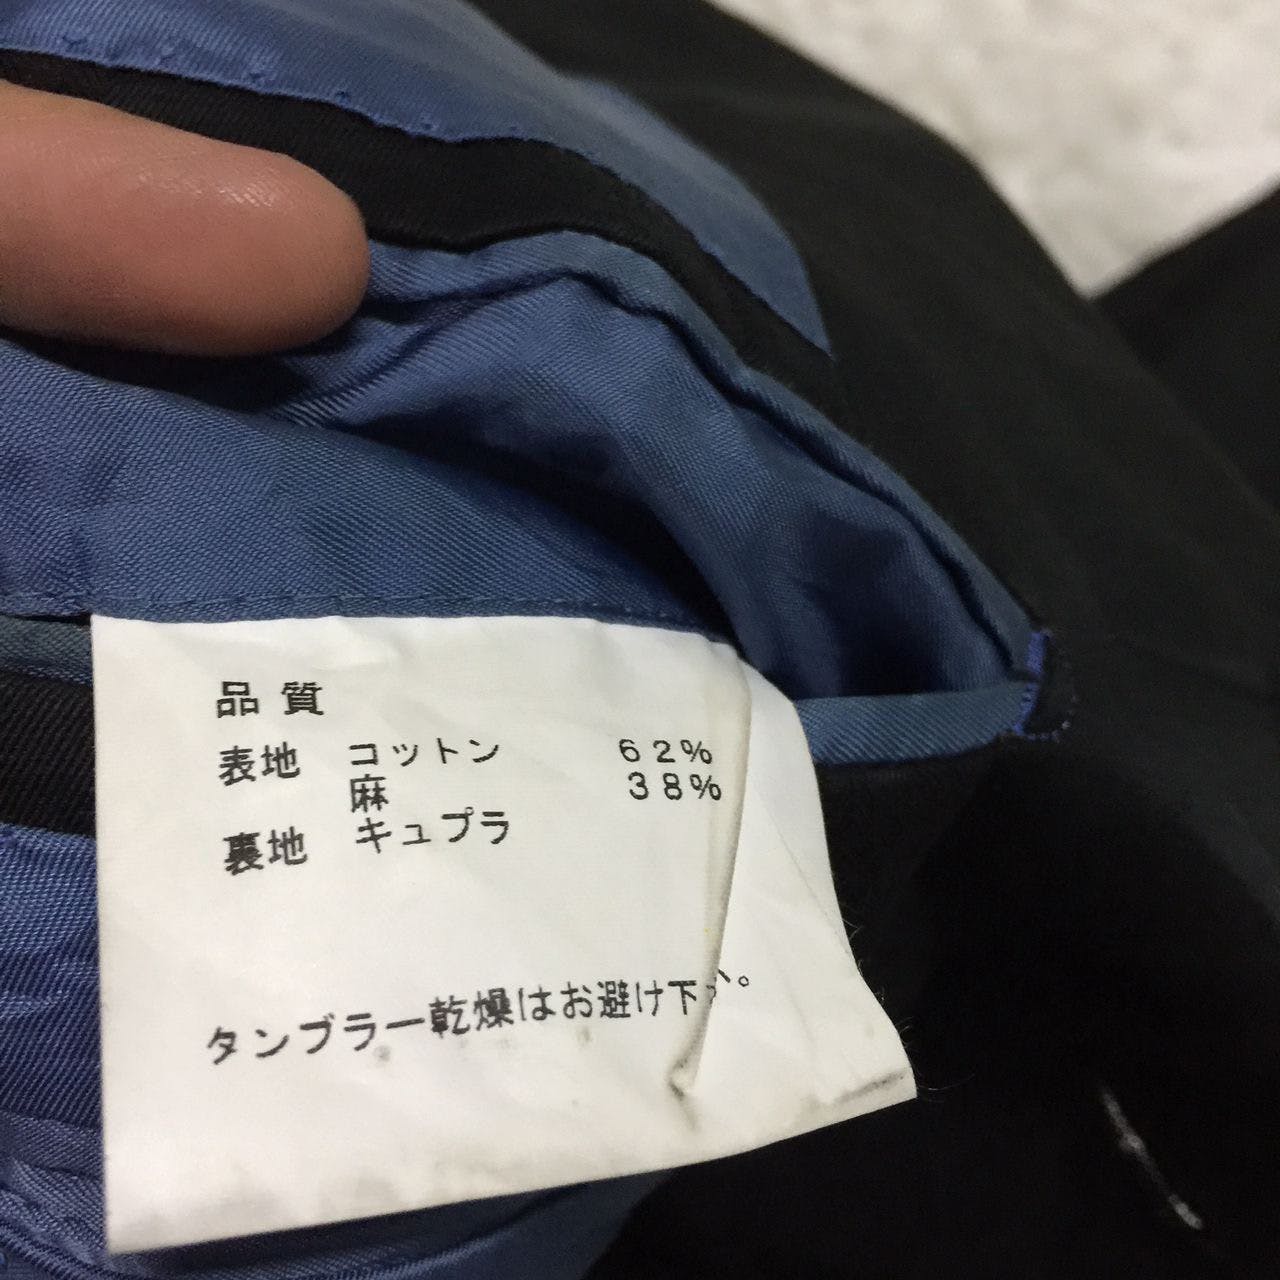 Lanvin blazer jacket made in Japan - 8